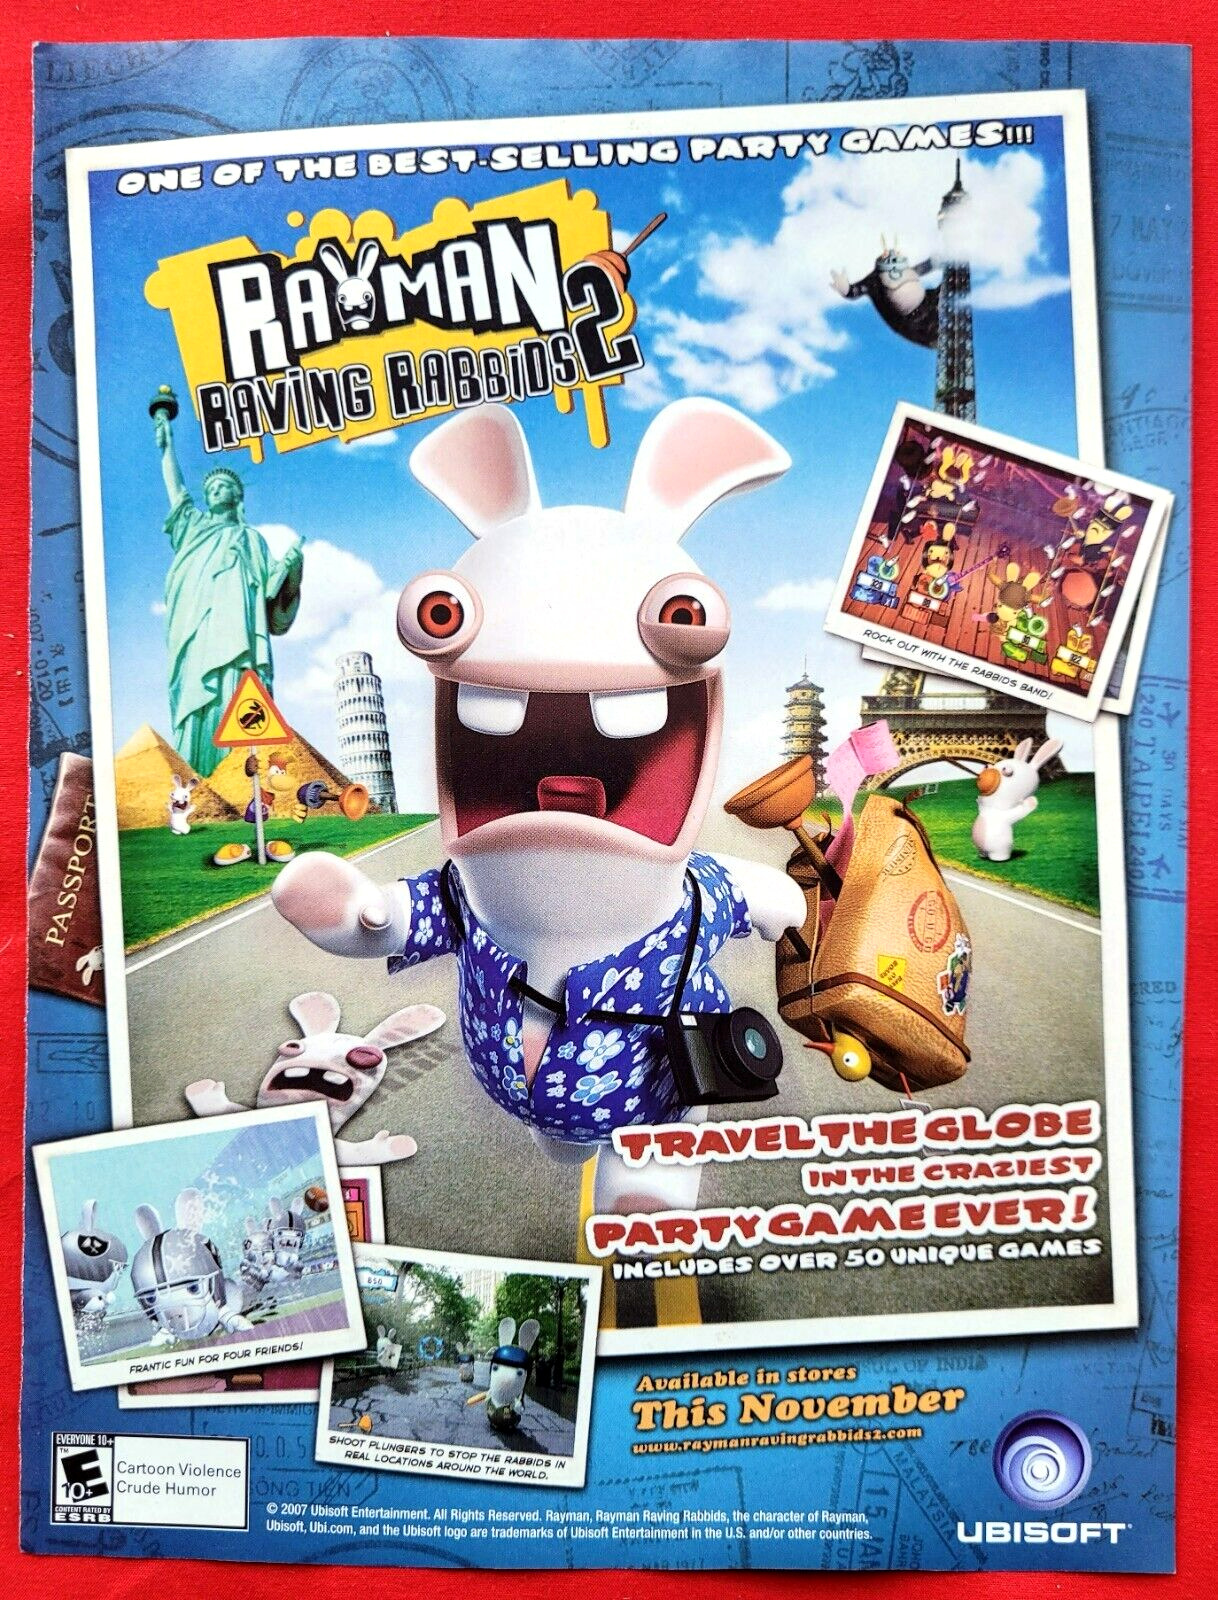 2007 RAYMAN Raving Rabbids 2 Video Game - Promo PRINT AD